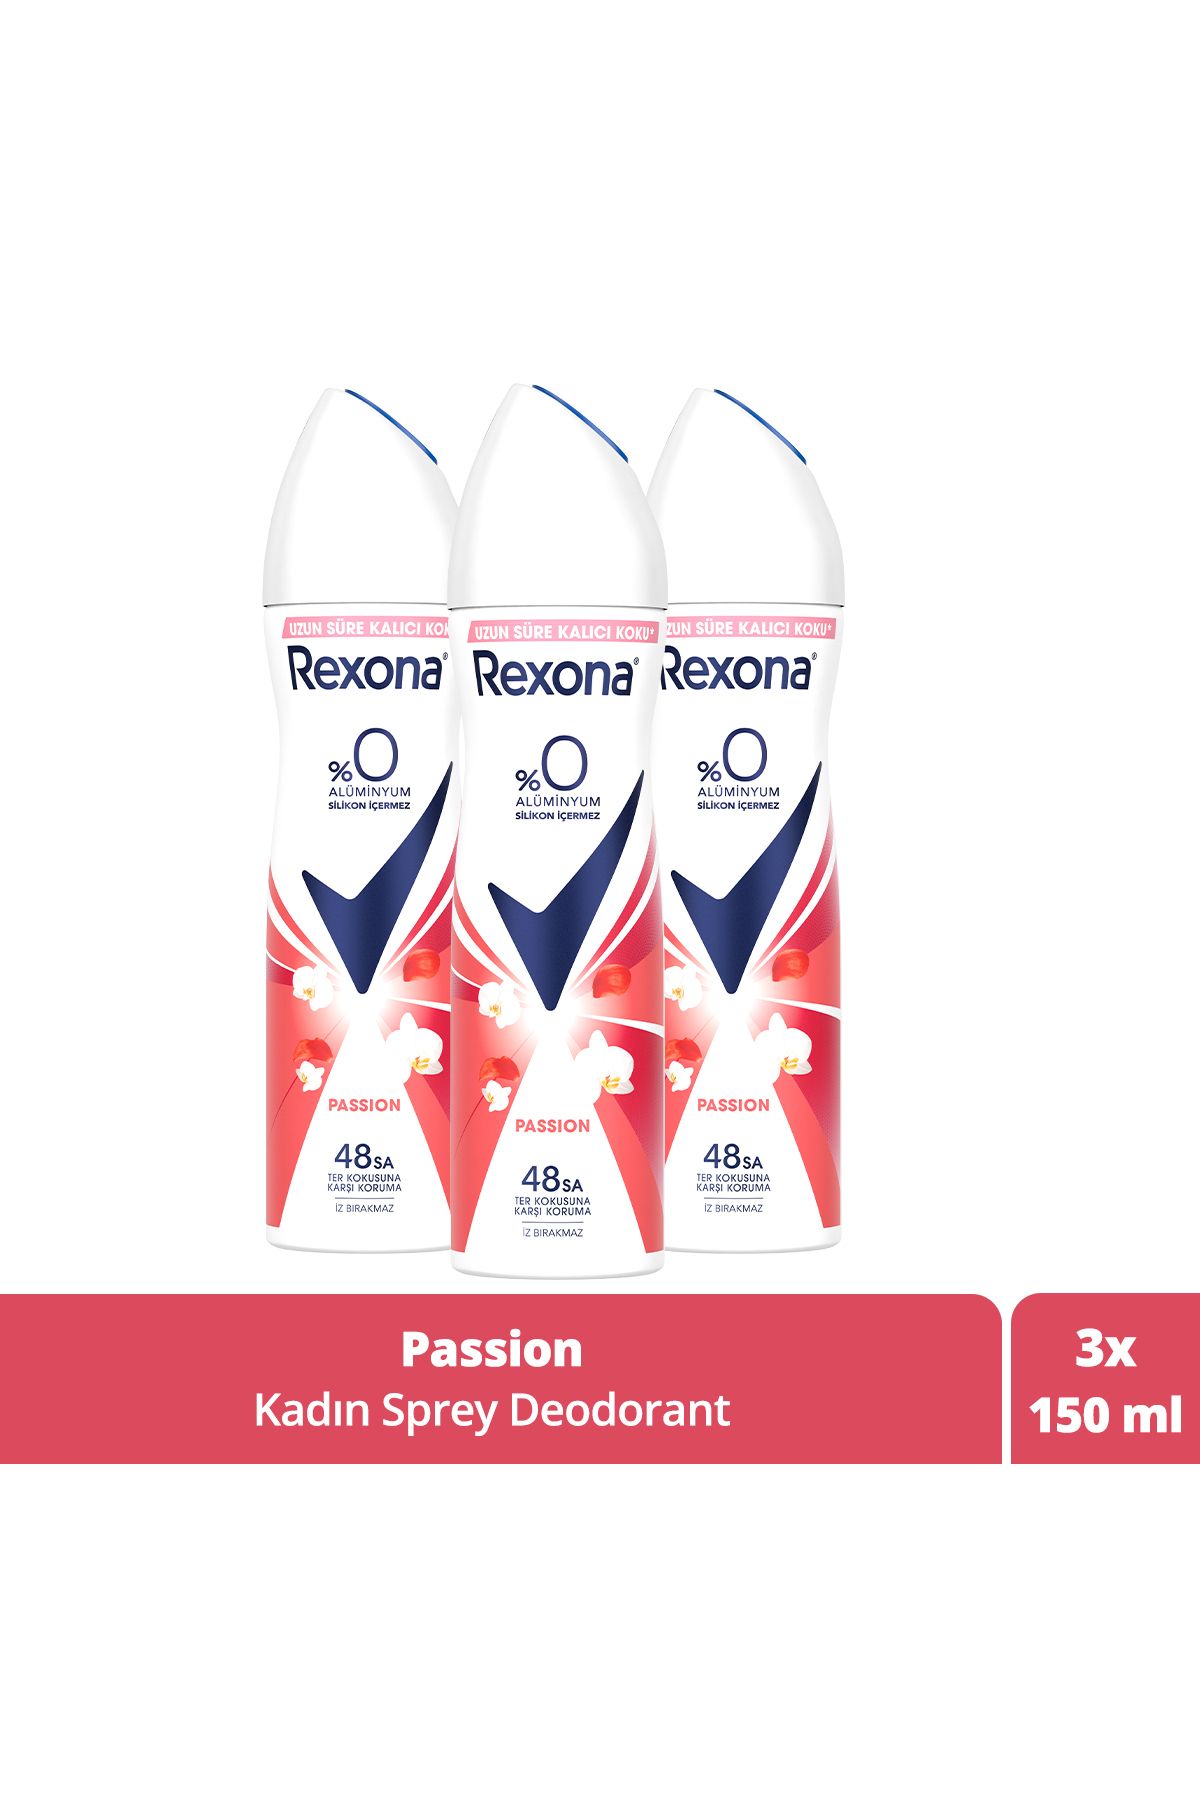 Rexona Kadın Sprey Deodorant Passion %0 Alüminyum 48 Saat Ter Kokusuna Karşı Koruma 150 ml X3